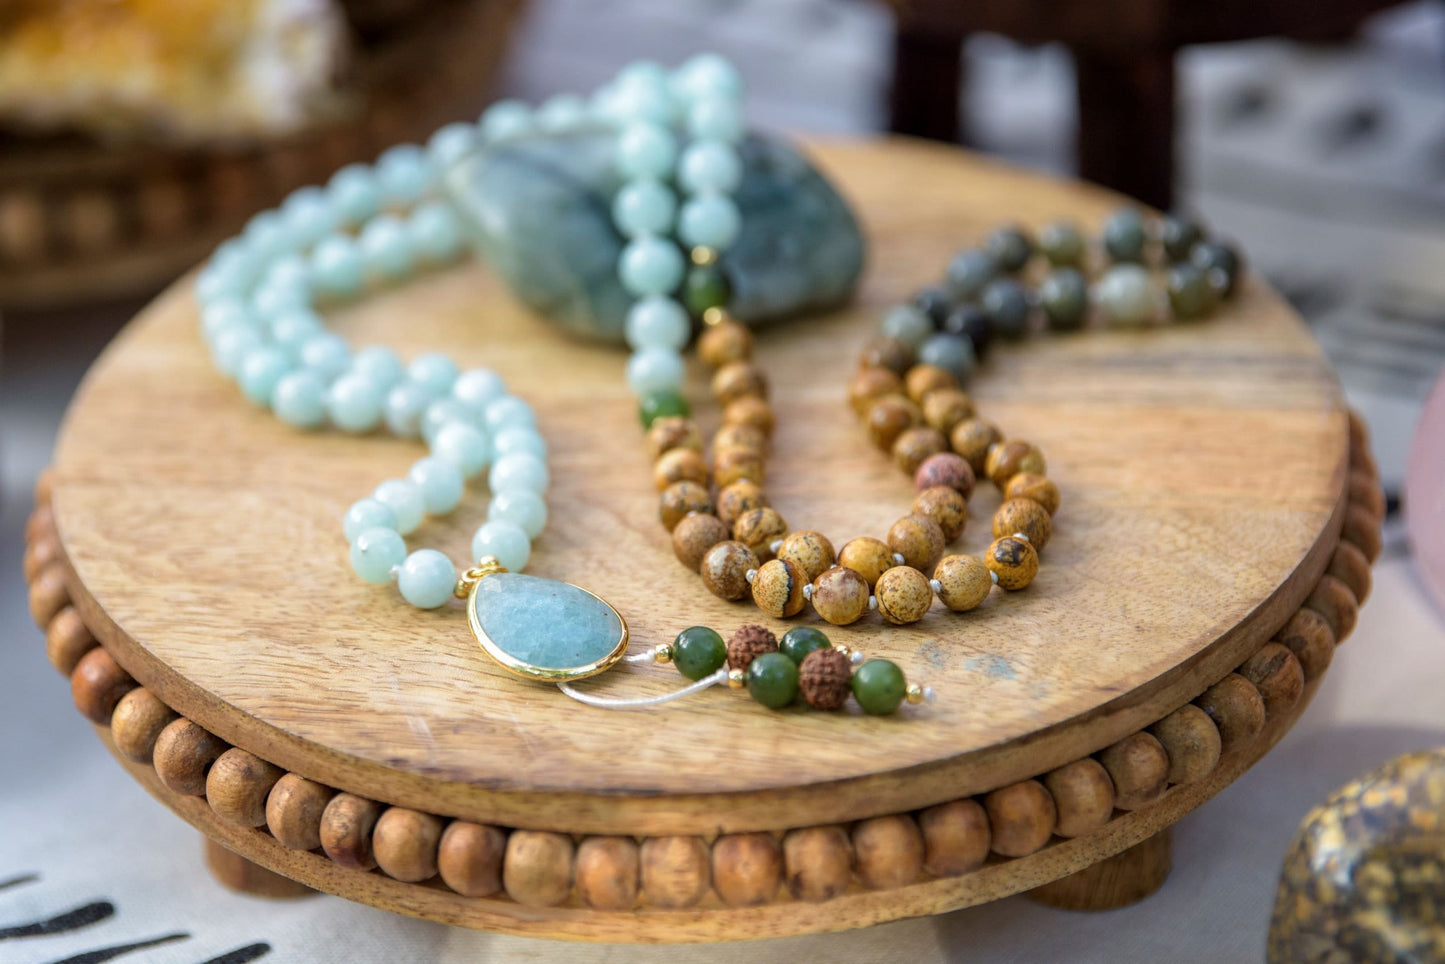 Power Energy Mala Beads, Buddist Prayer Beads 108, Yoga Necklace, Mindful Gift.